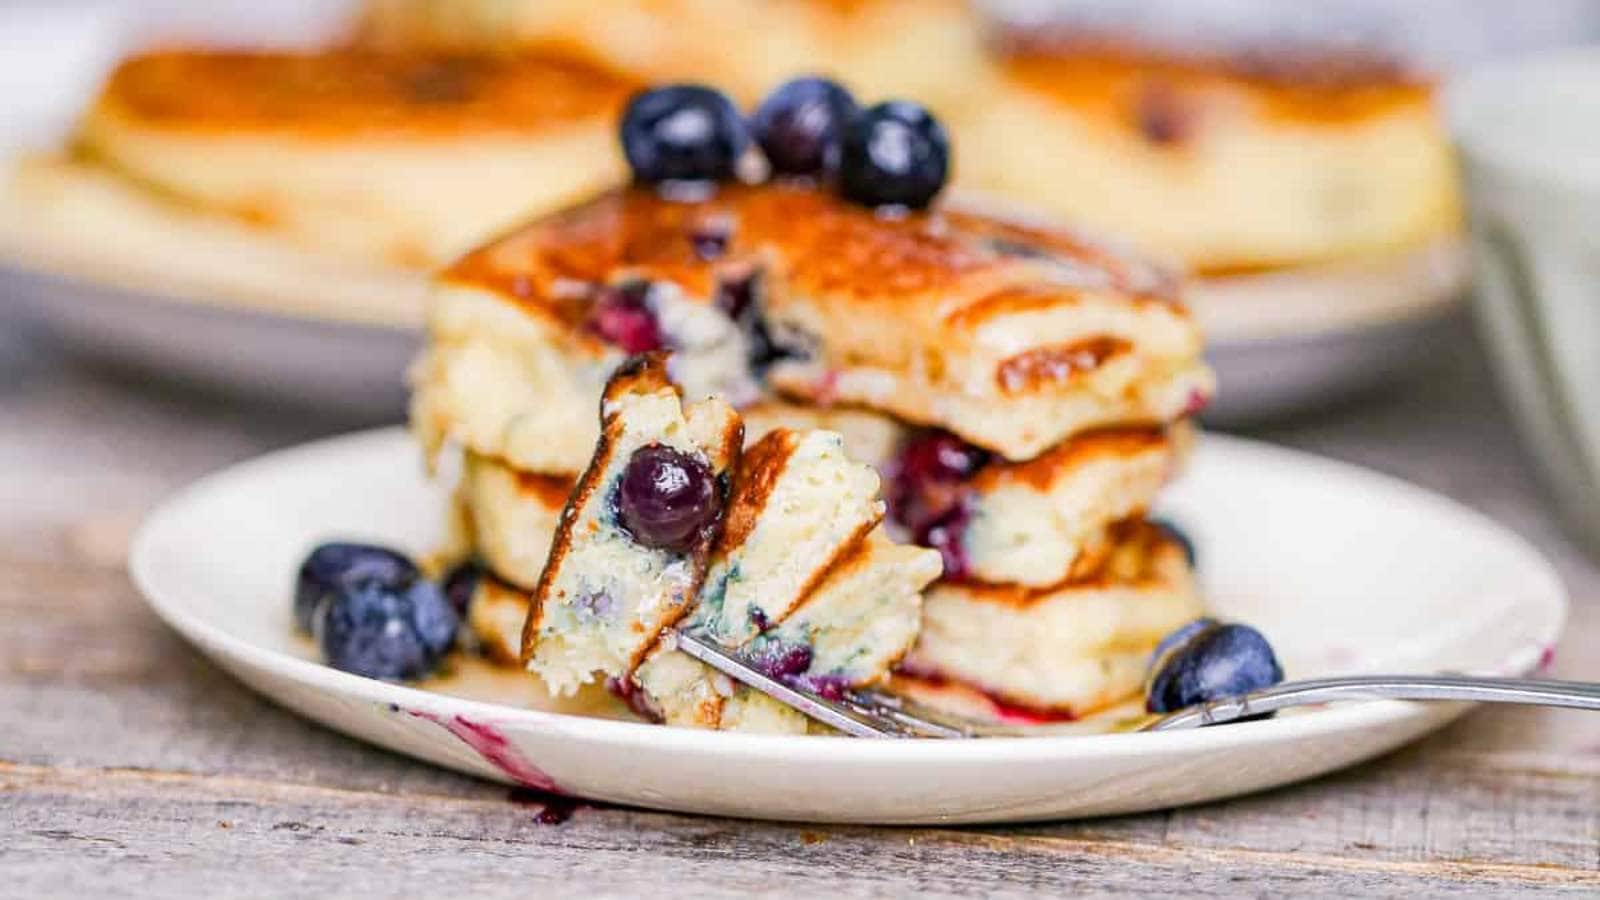 Greek Yogurt Blueberry Pancakes recipe by The Baking Chocolatess.